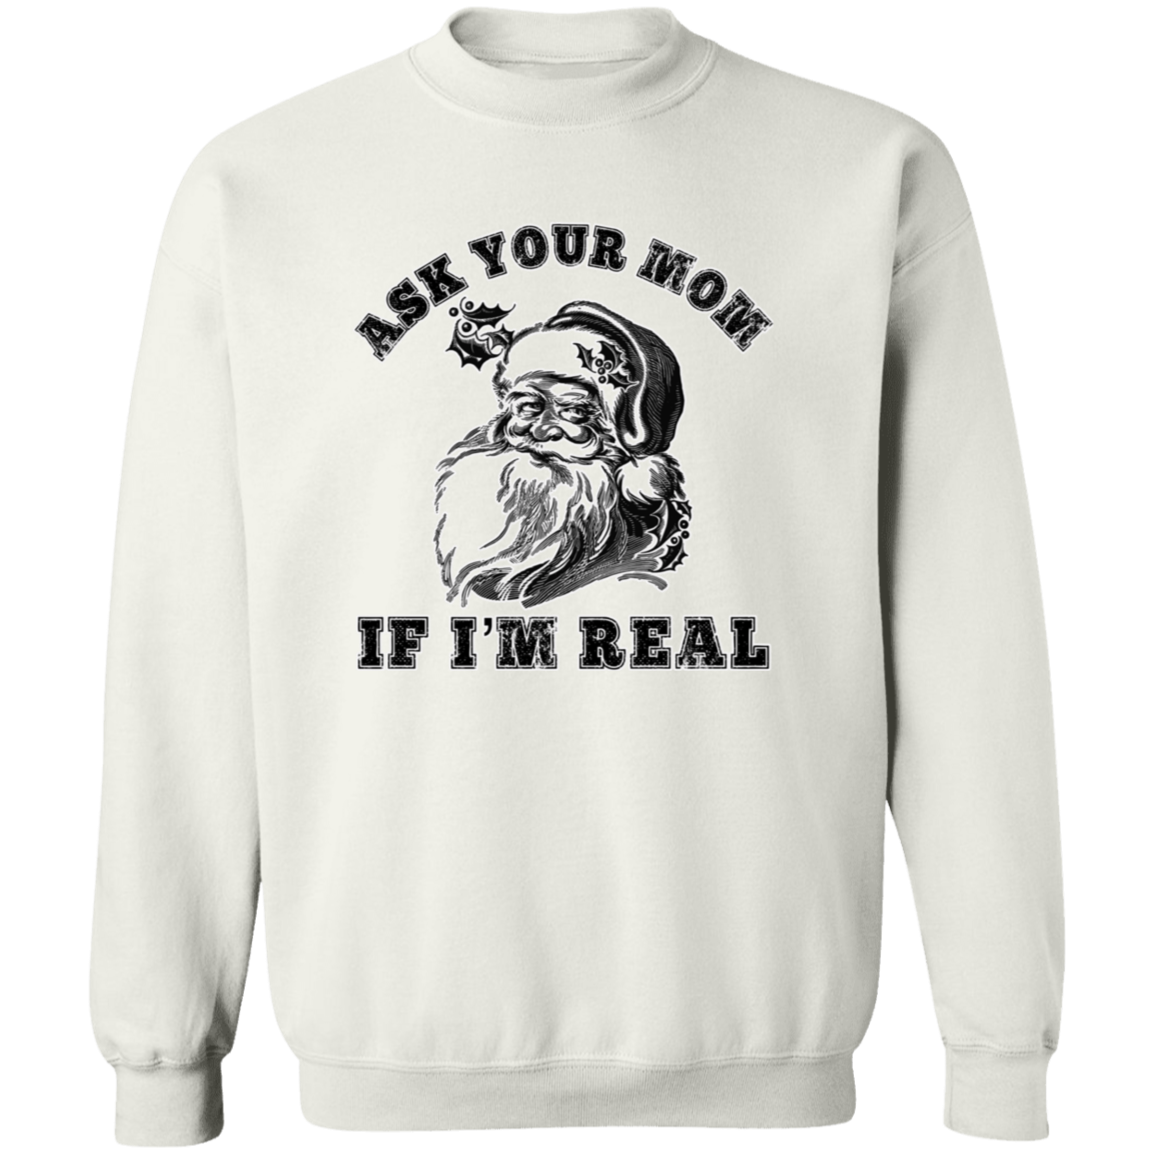 Ask Your Mom G180 Crewneck Pullover Sweatshirt